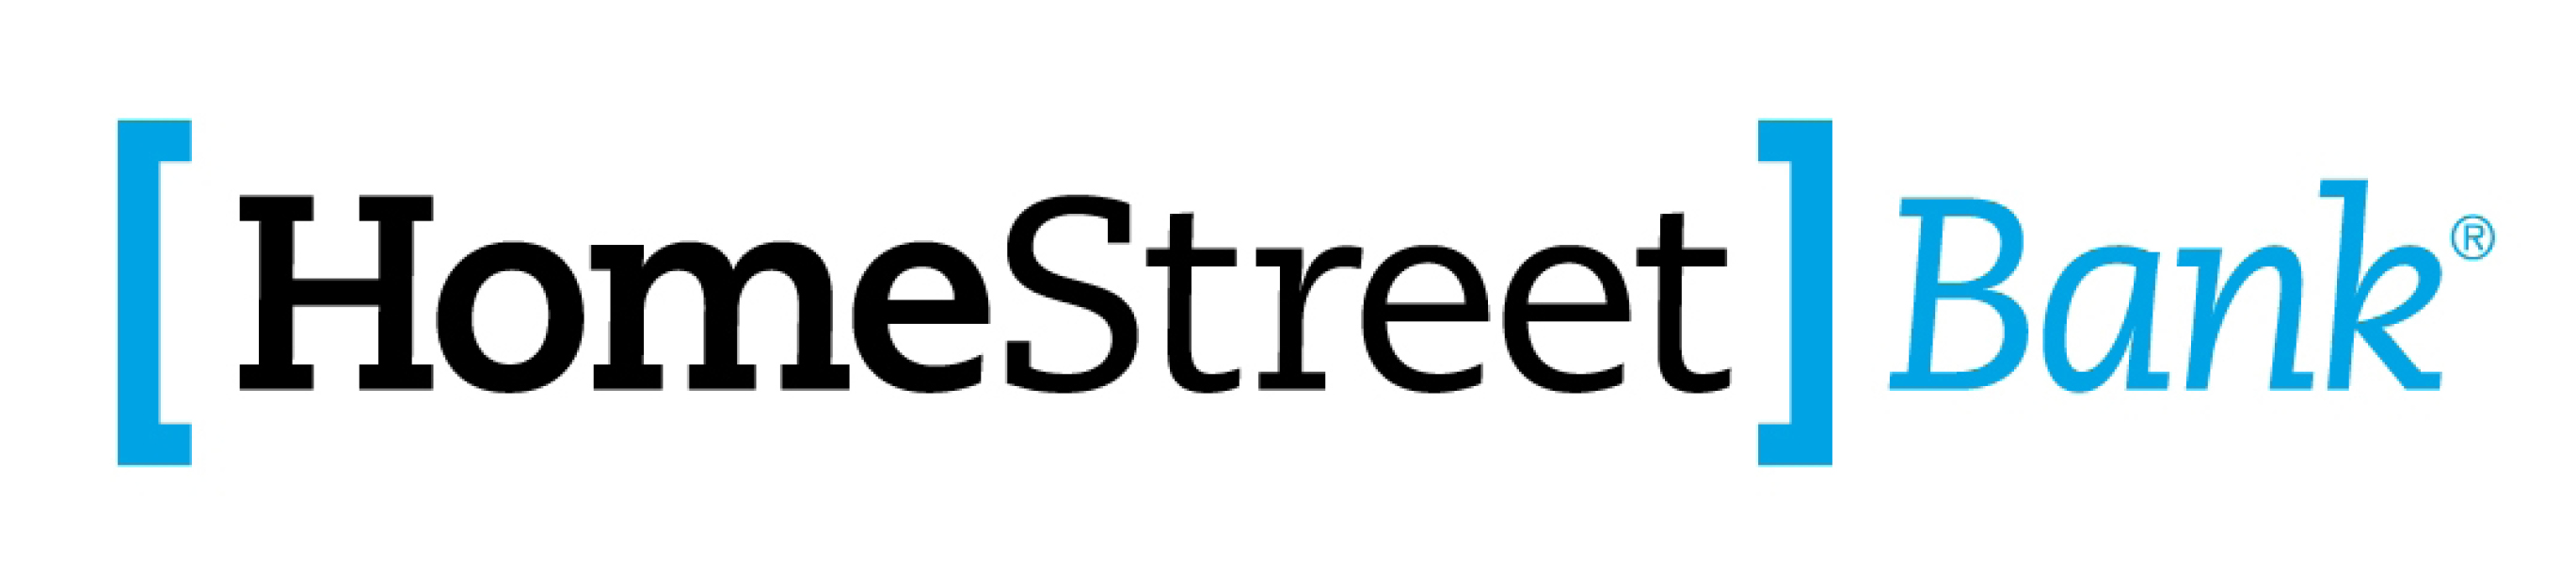 HomeStreet Bank Sells 20 Percent of MSRs to Matrix Financial